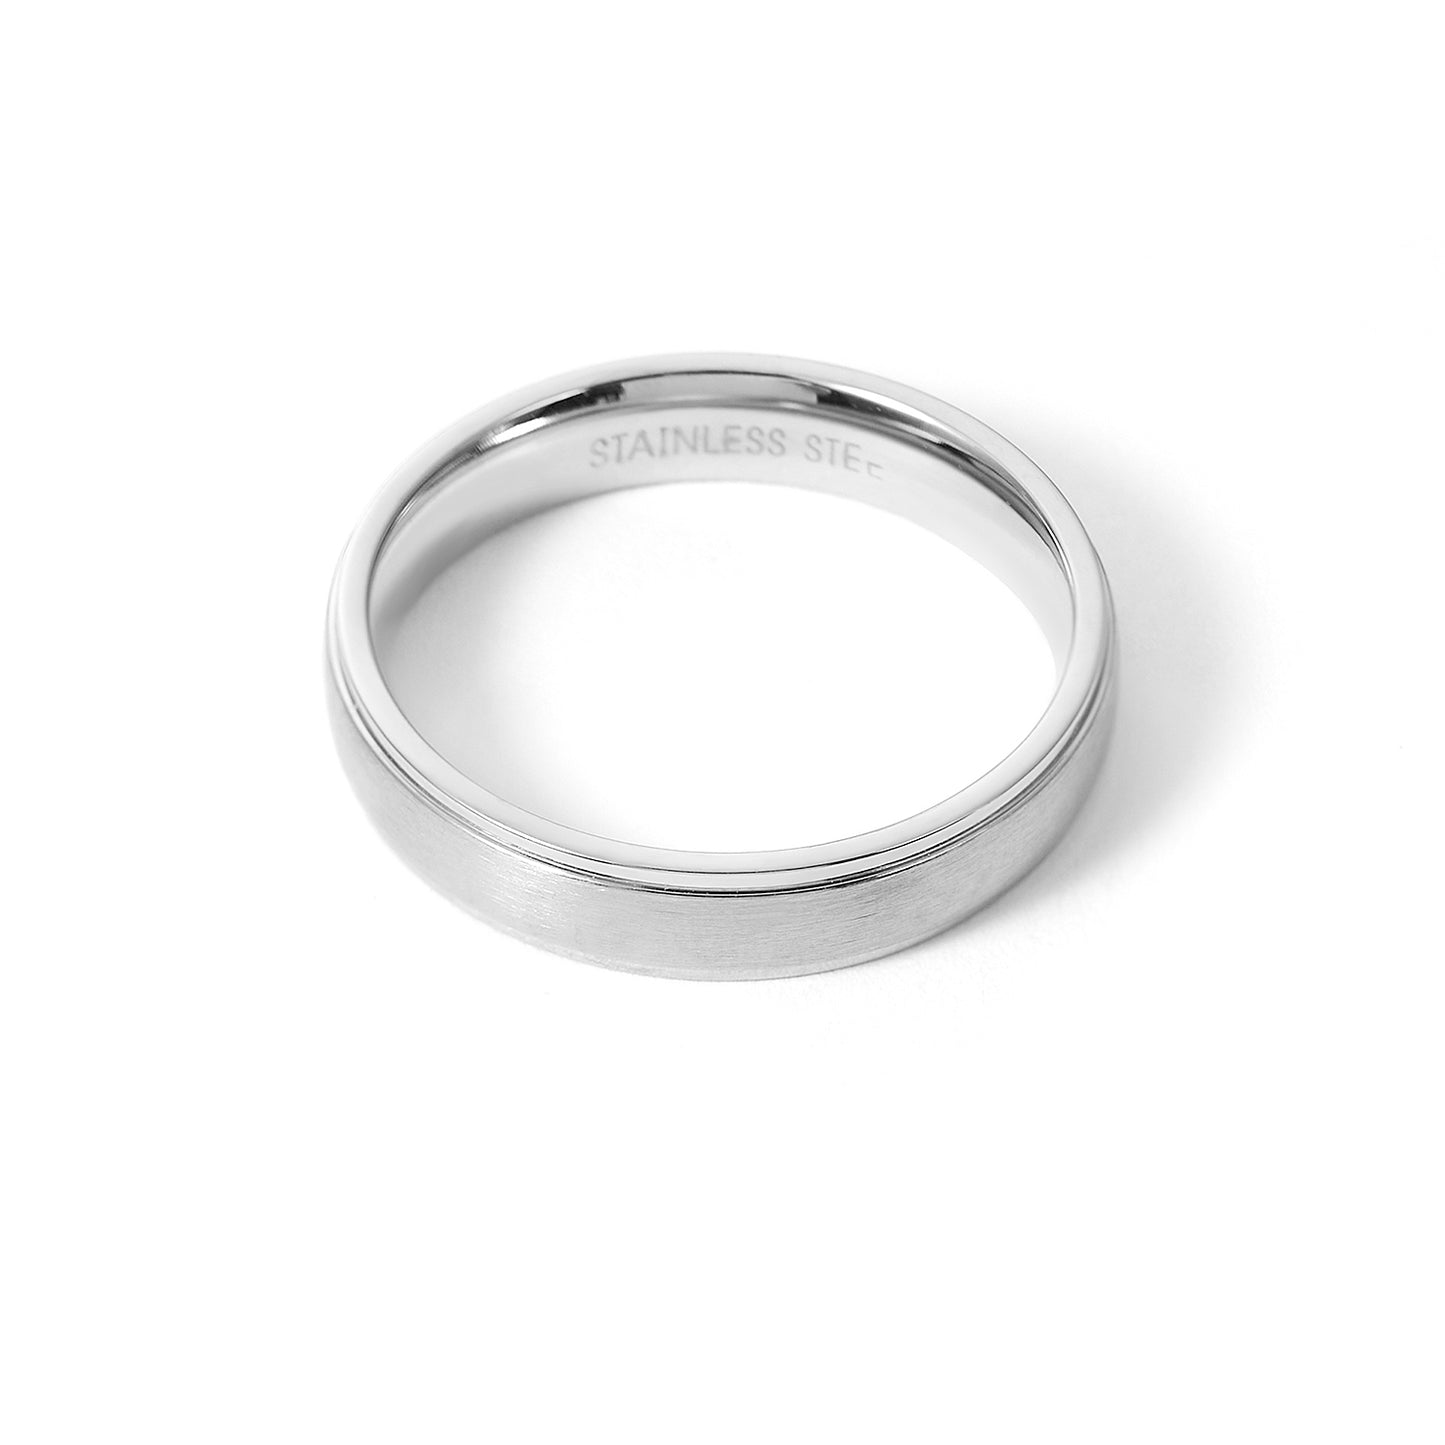 Stainless Steel Brushed Men's Wedding Ring with Polished Beveled Edges